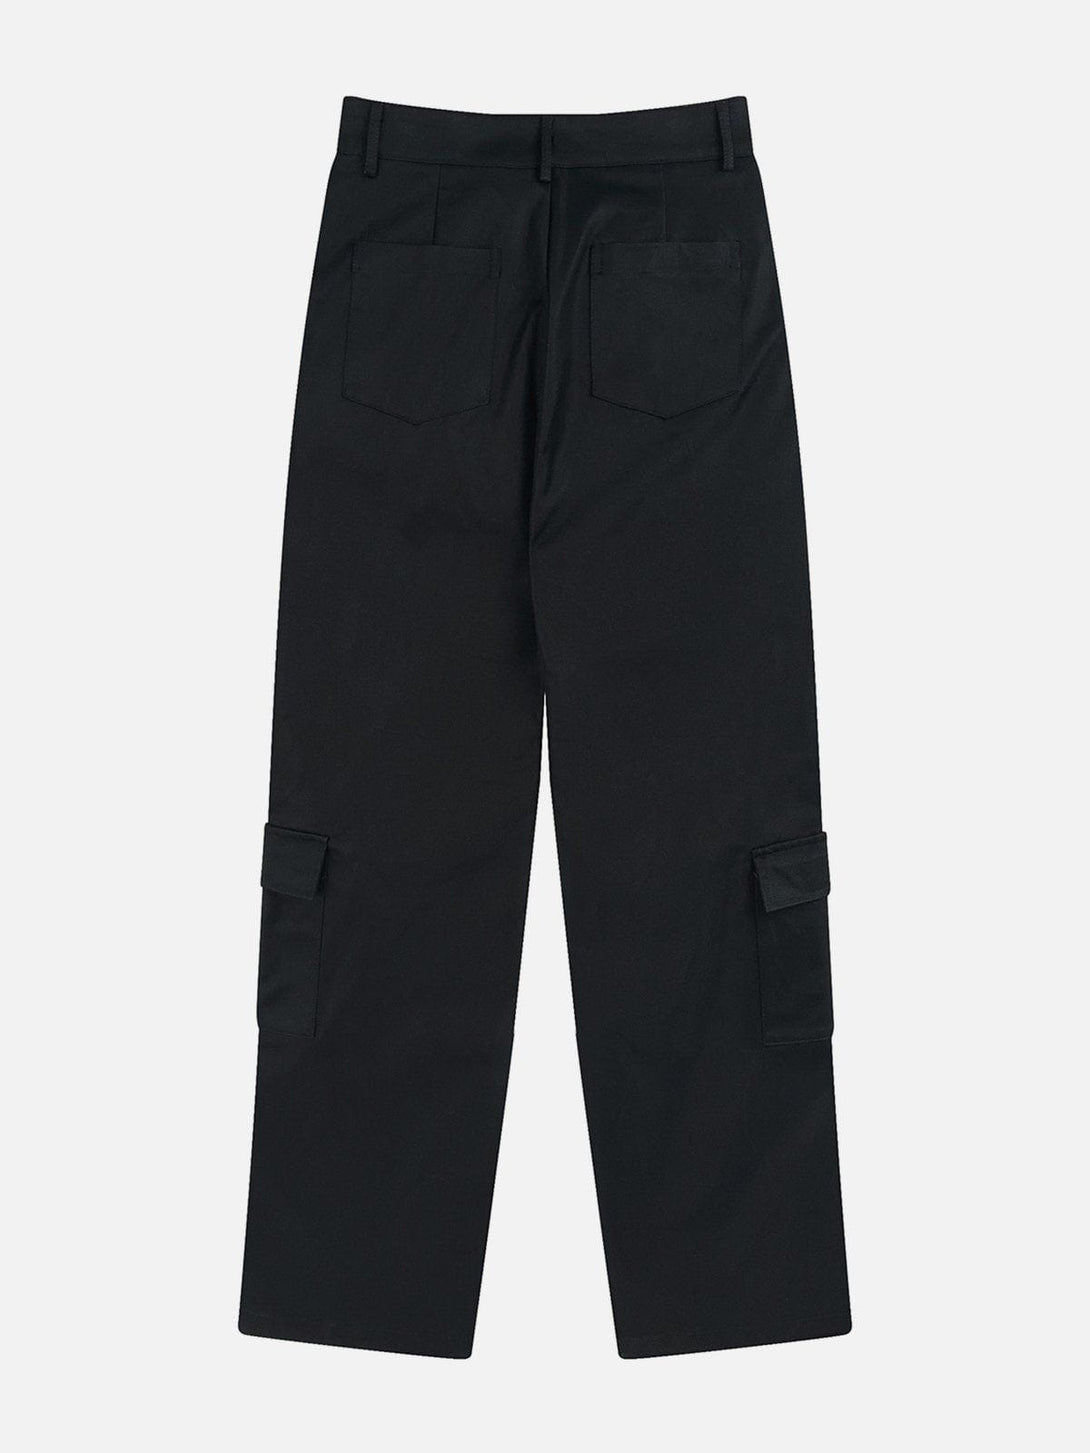 AlanBalen® - Large Pocket Zip Pants AlanBalen